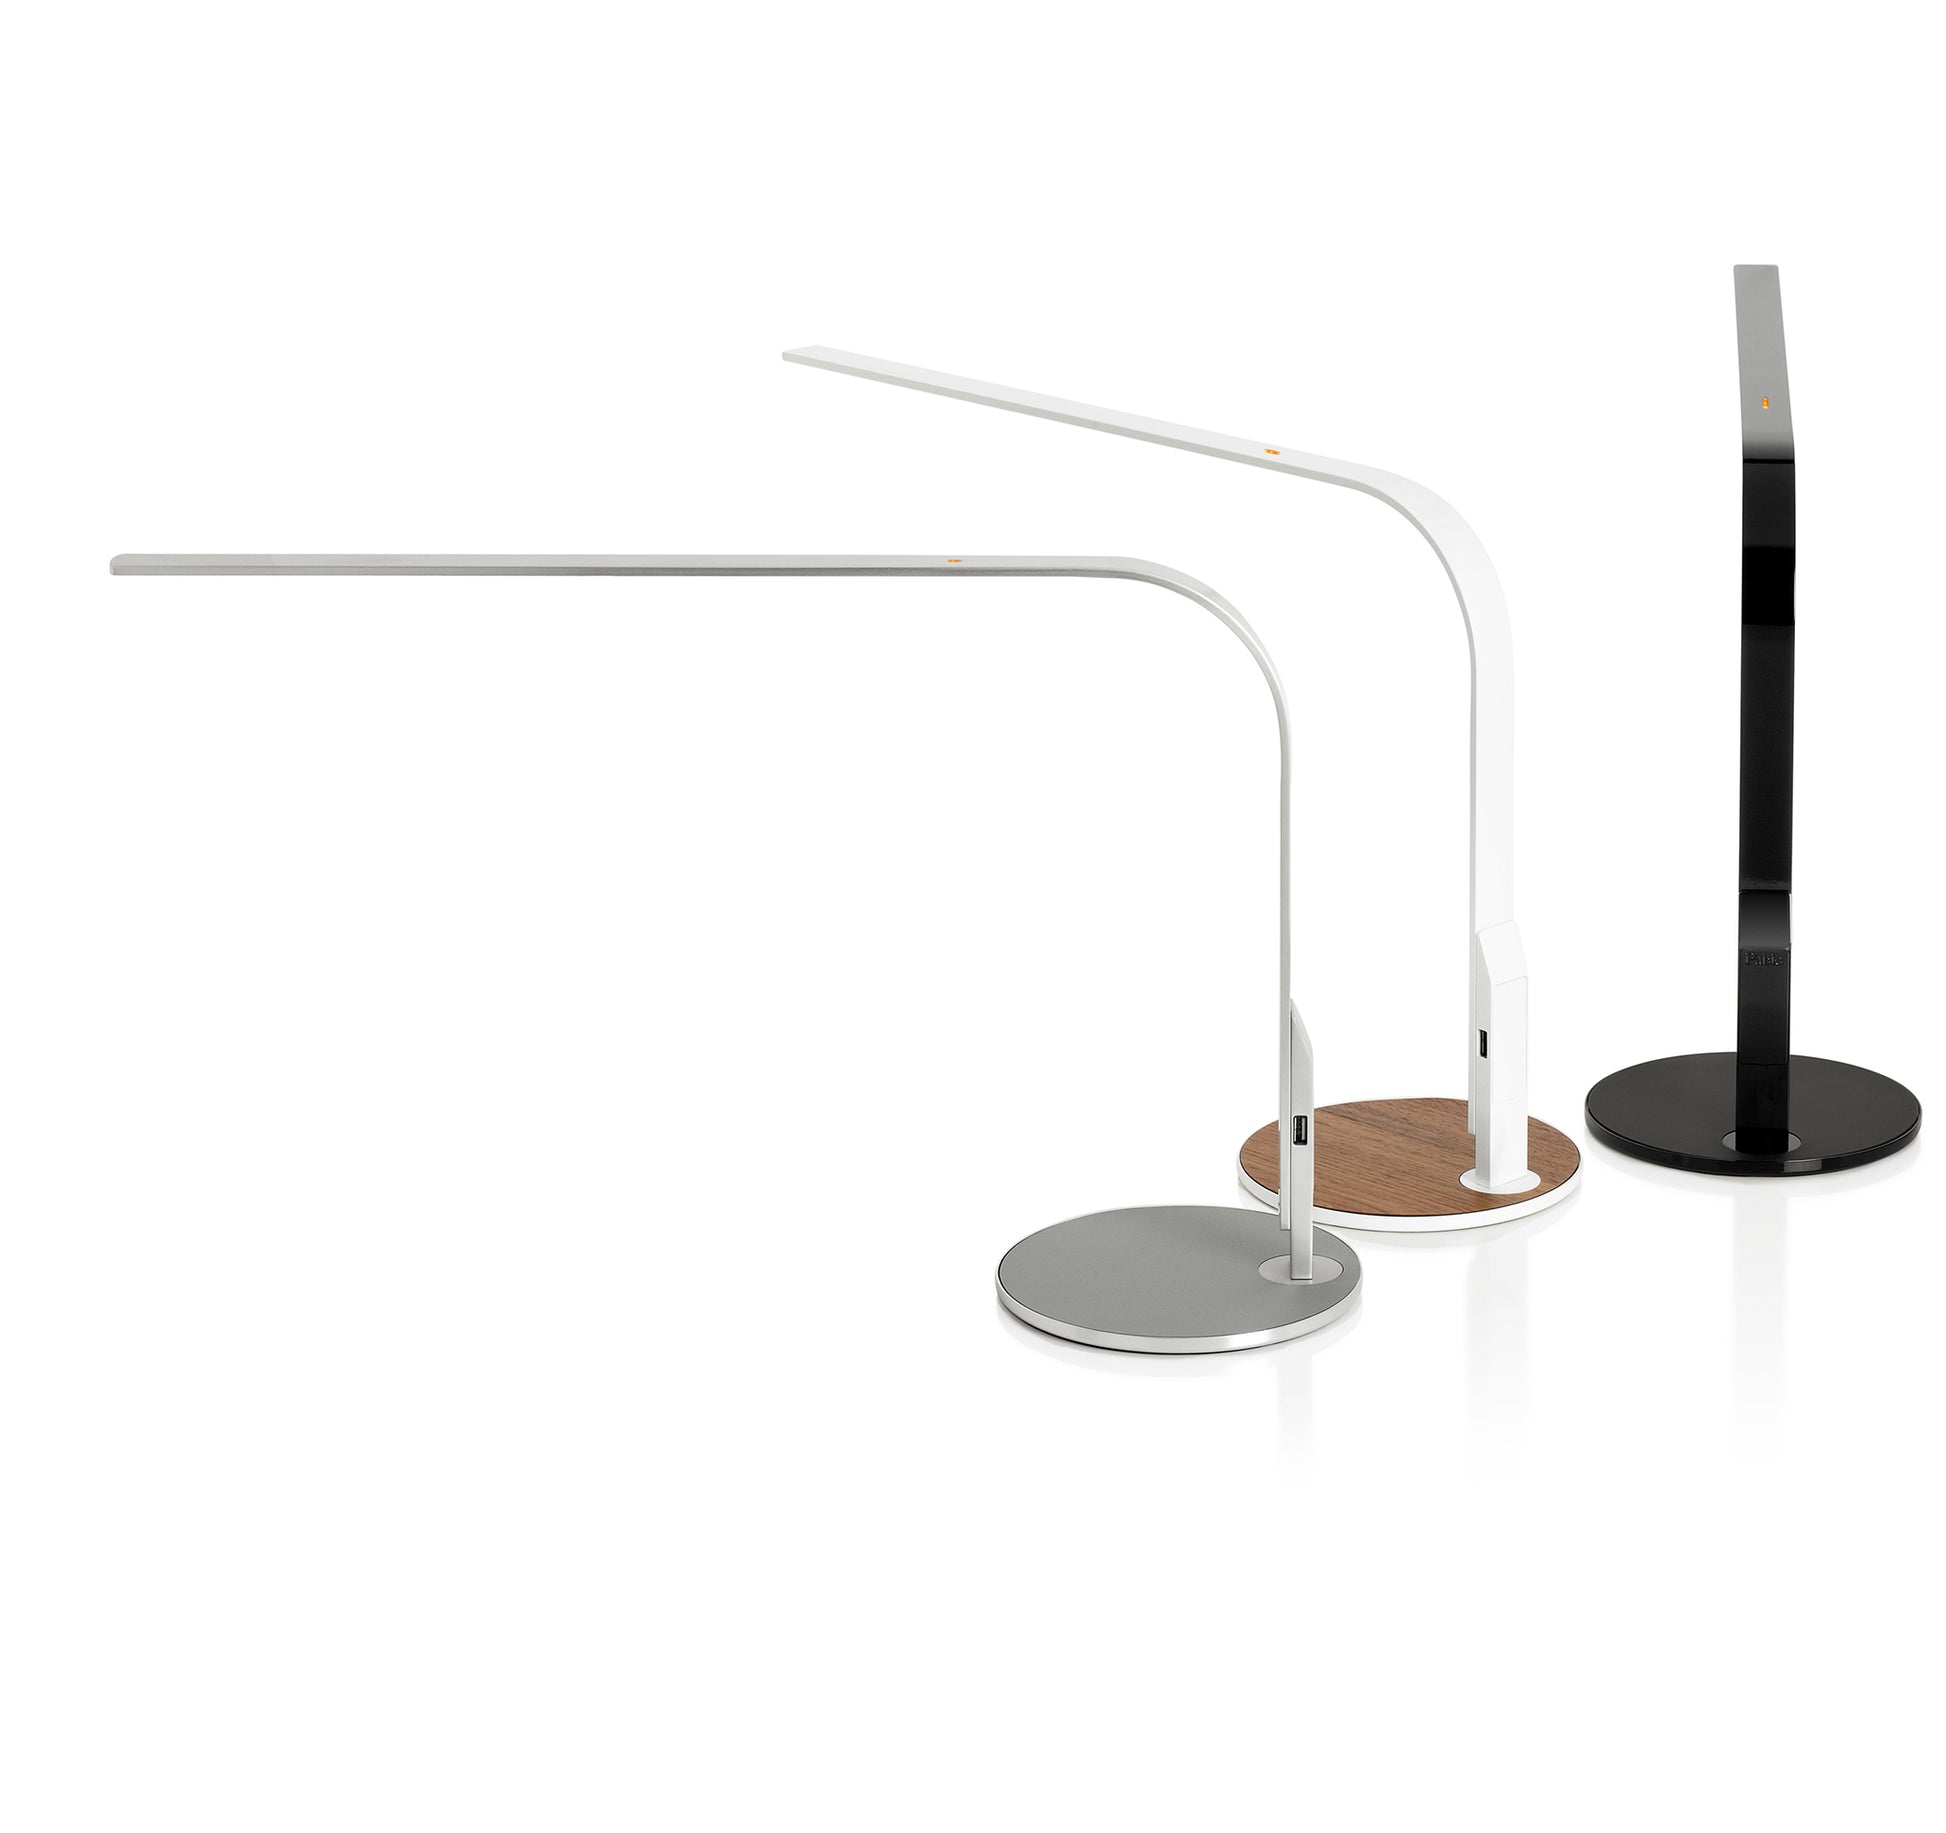 Pablo Designs Lim 360 - LoftModernPablo Designs Lim 360 LED Table Lamp | Loftmodern 15